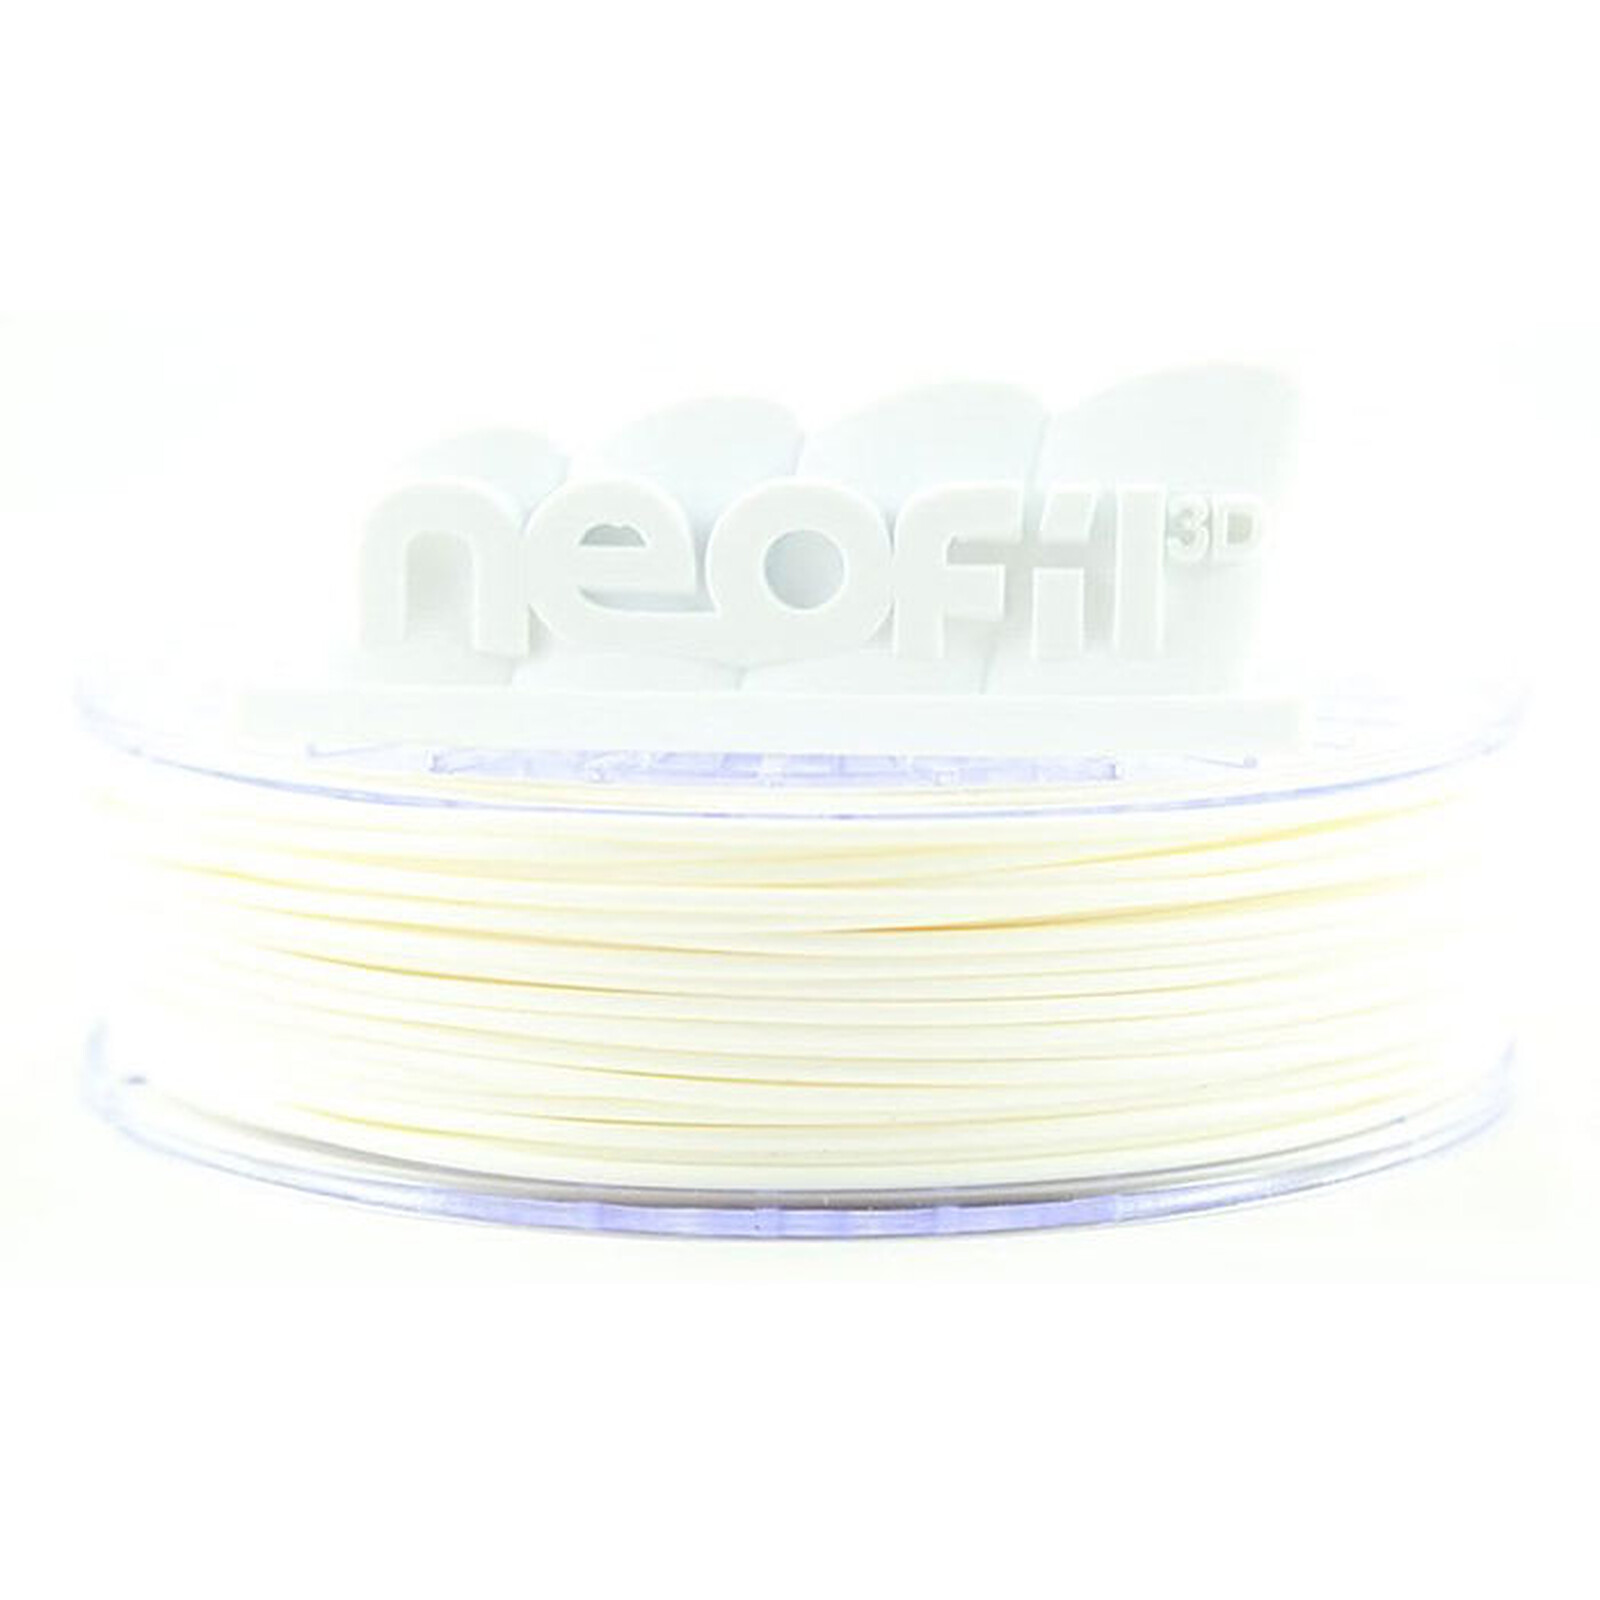 Bianco Creality 3D PLA Filament 1.75mm 1KG Bobina per stampante 3D 